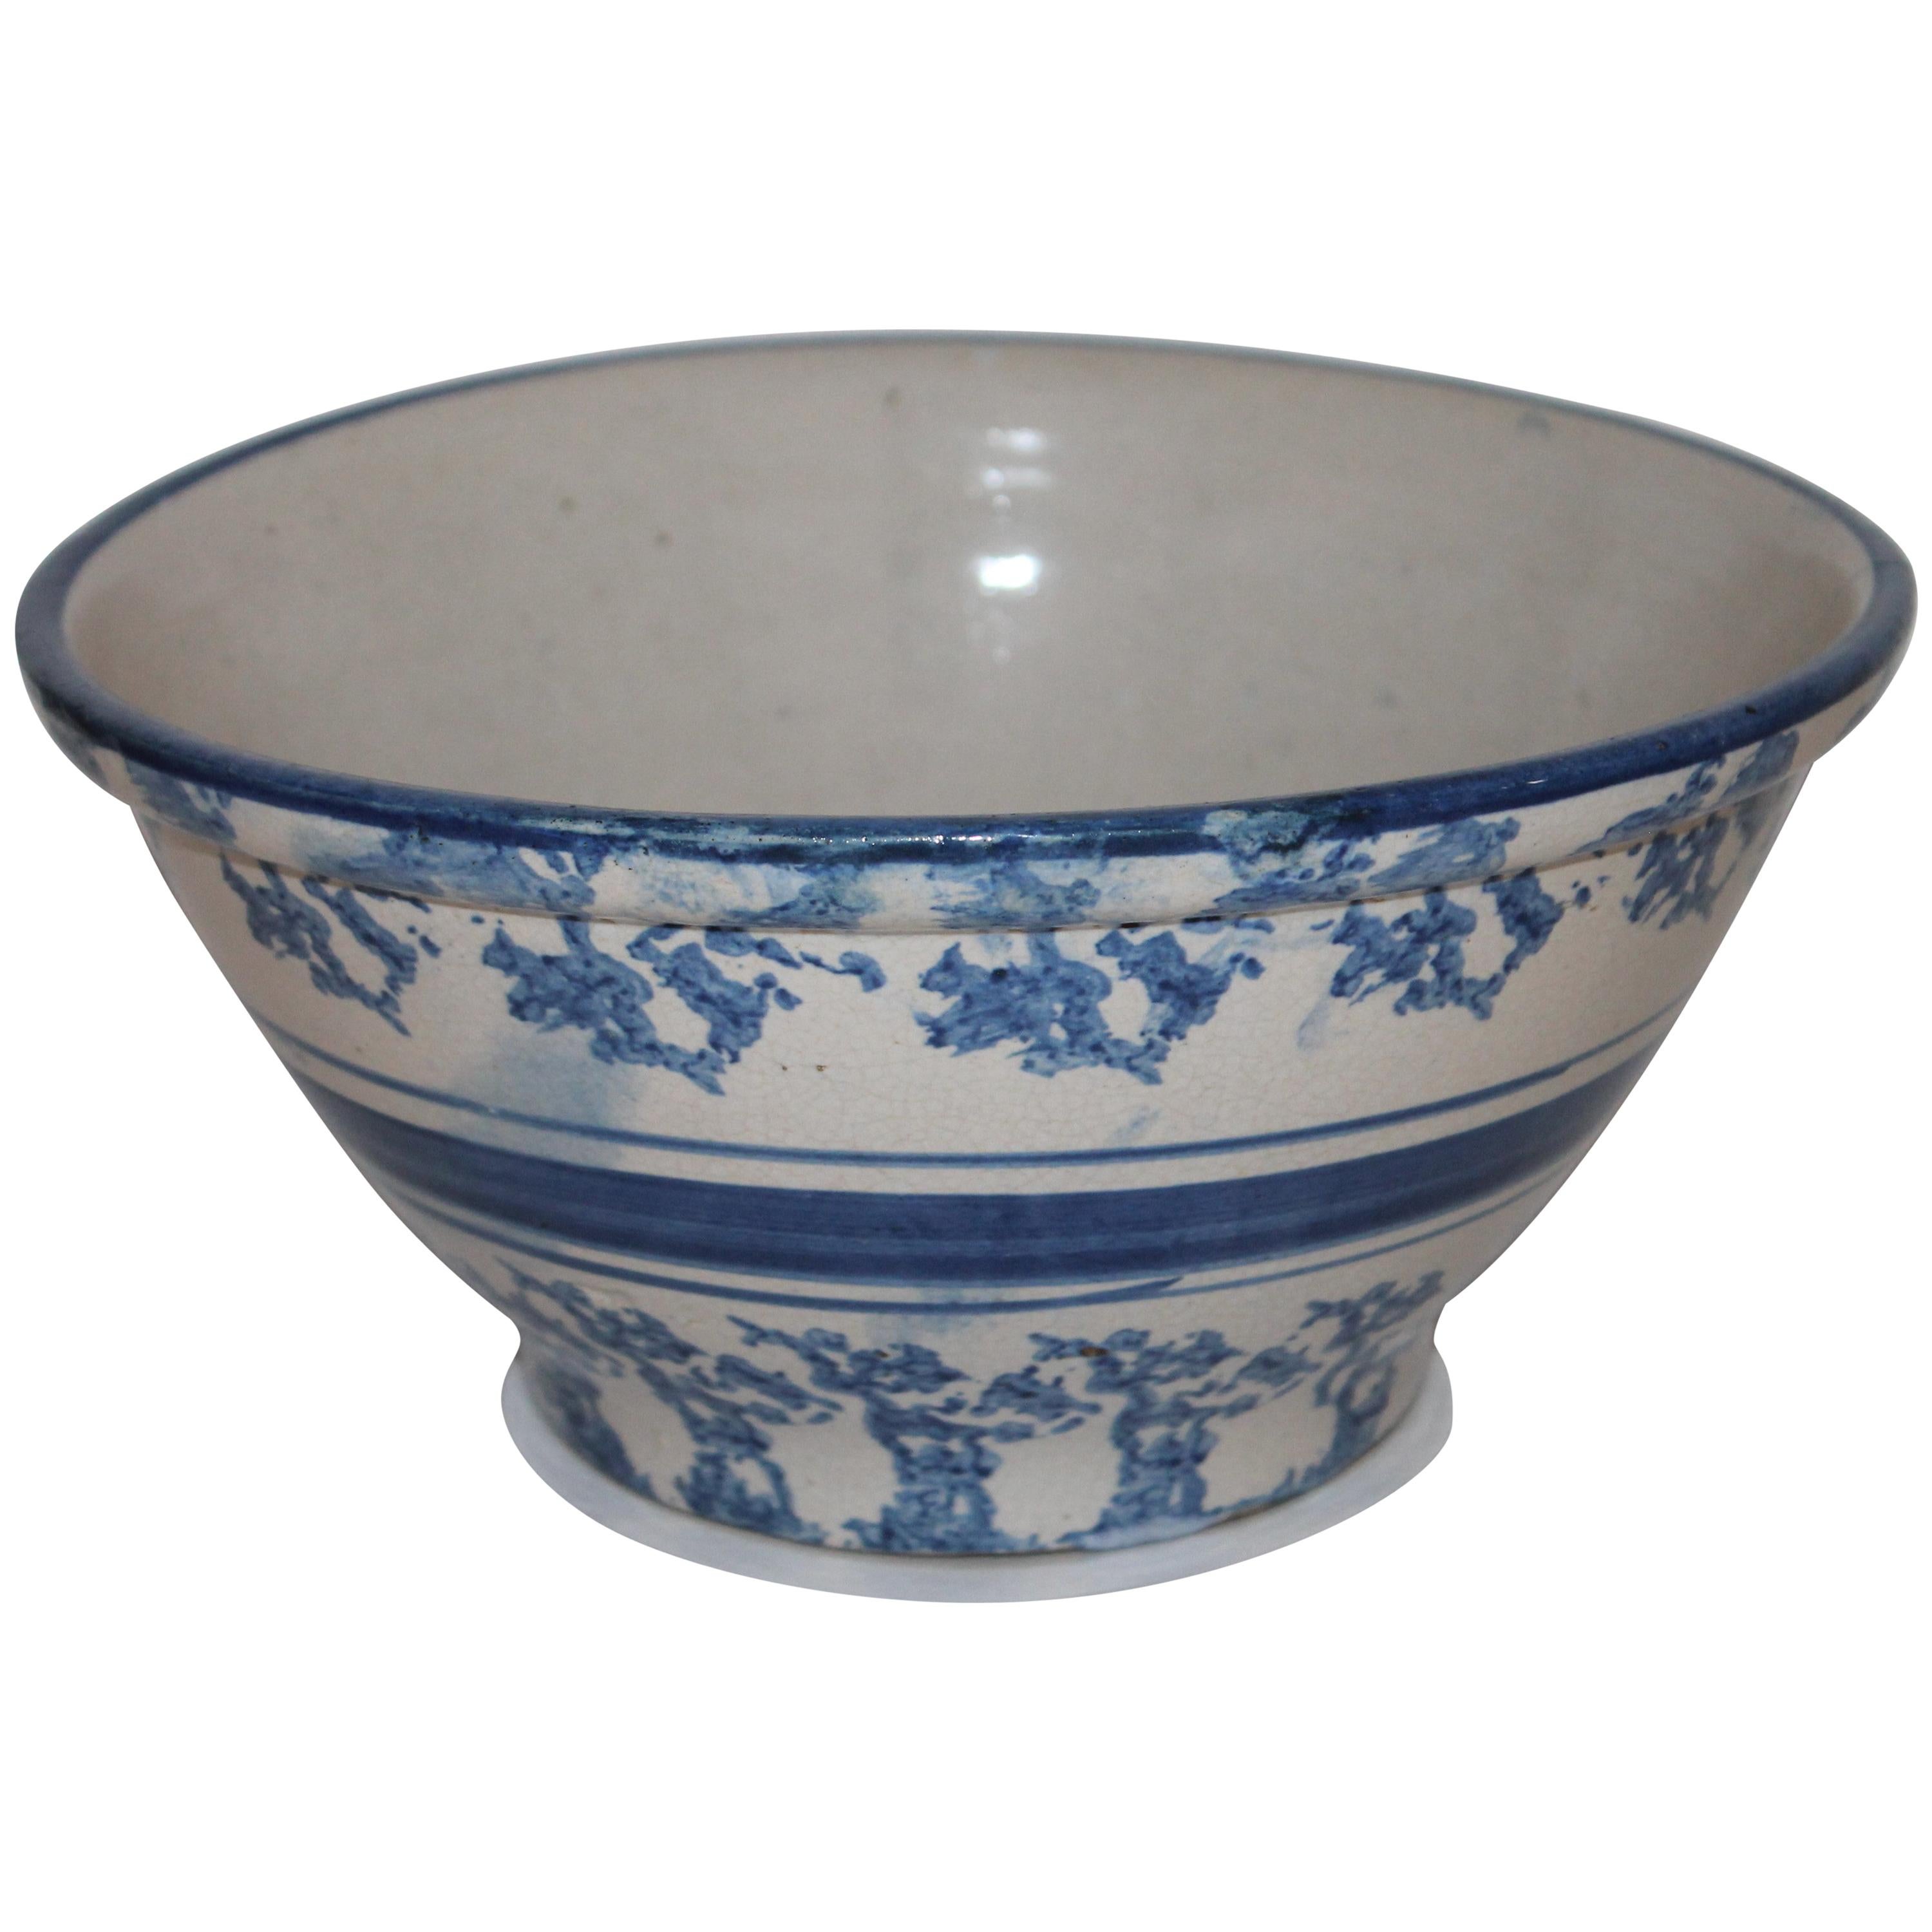 Sponge Ware Pottery Bowl, 19th Century